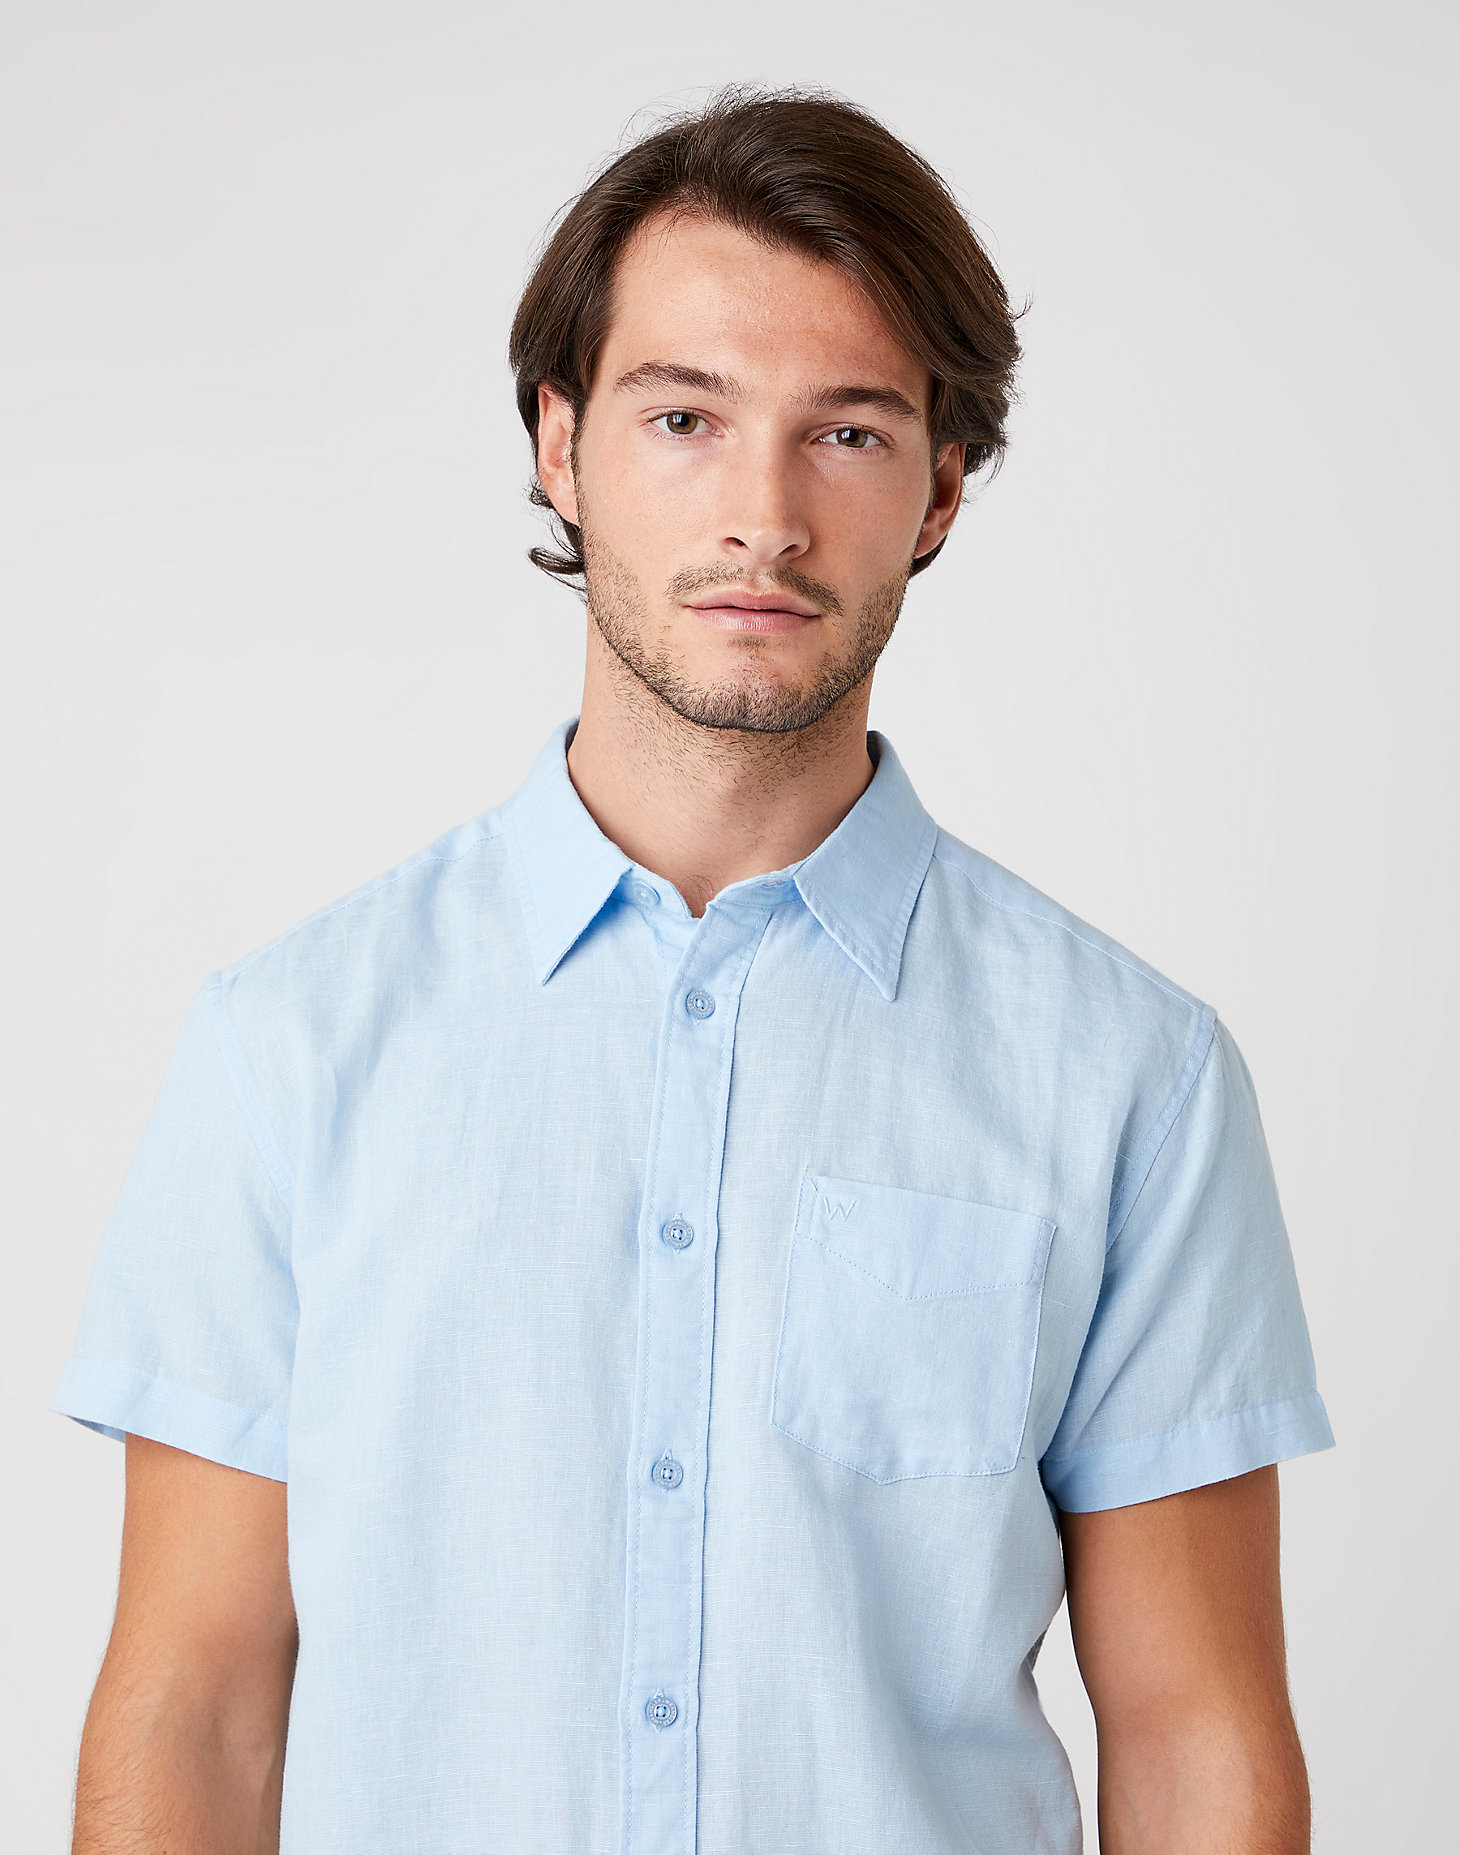 Short Sleeve One Pocket Shirt in Cerulean Blue alternative view 3